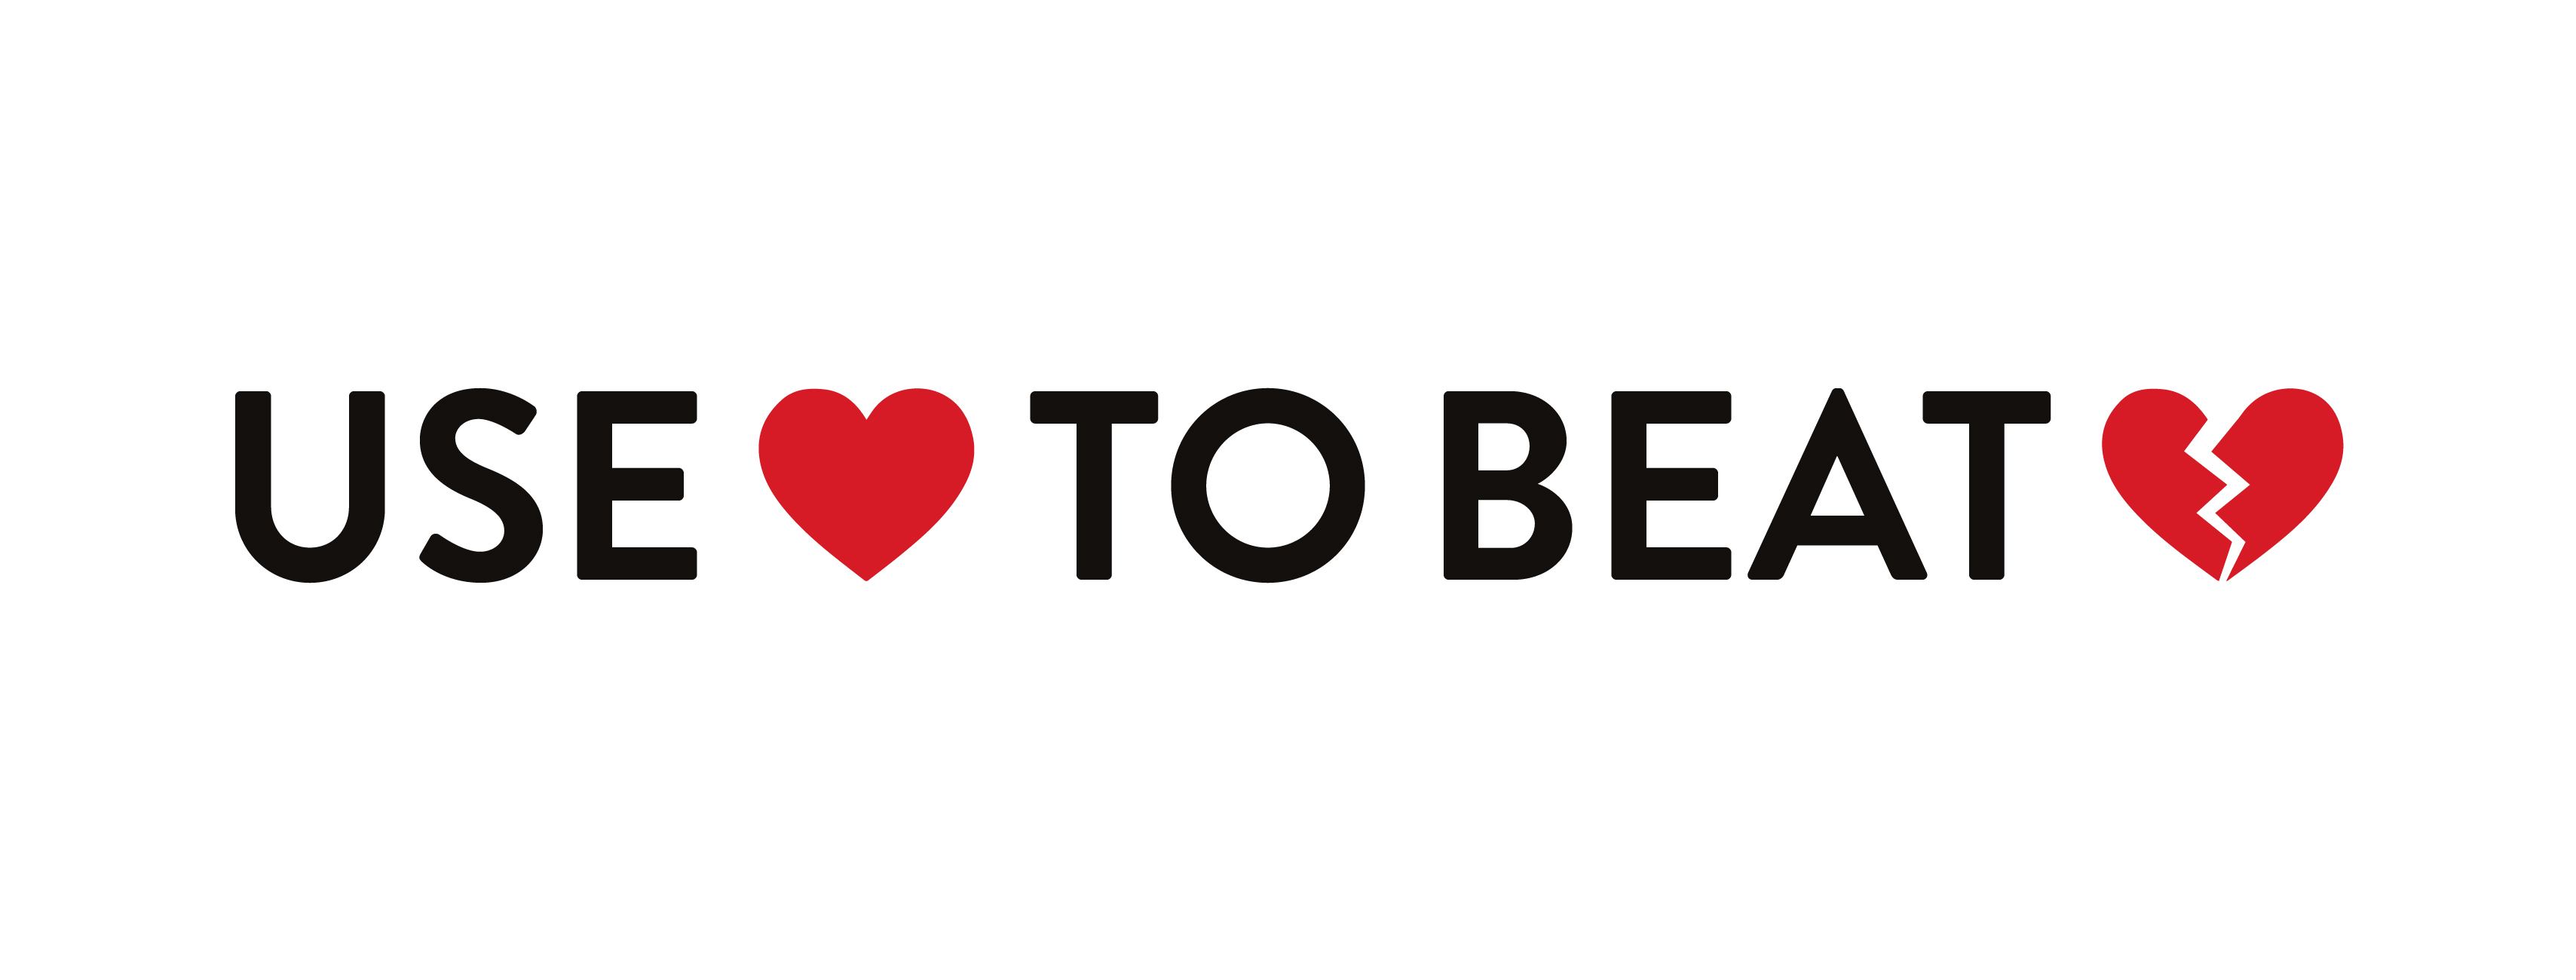 Beat-CVD-Facebook-Profile-Cover-Image-World-Heart-Day-2020.jpg